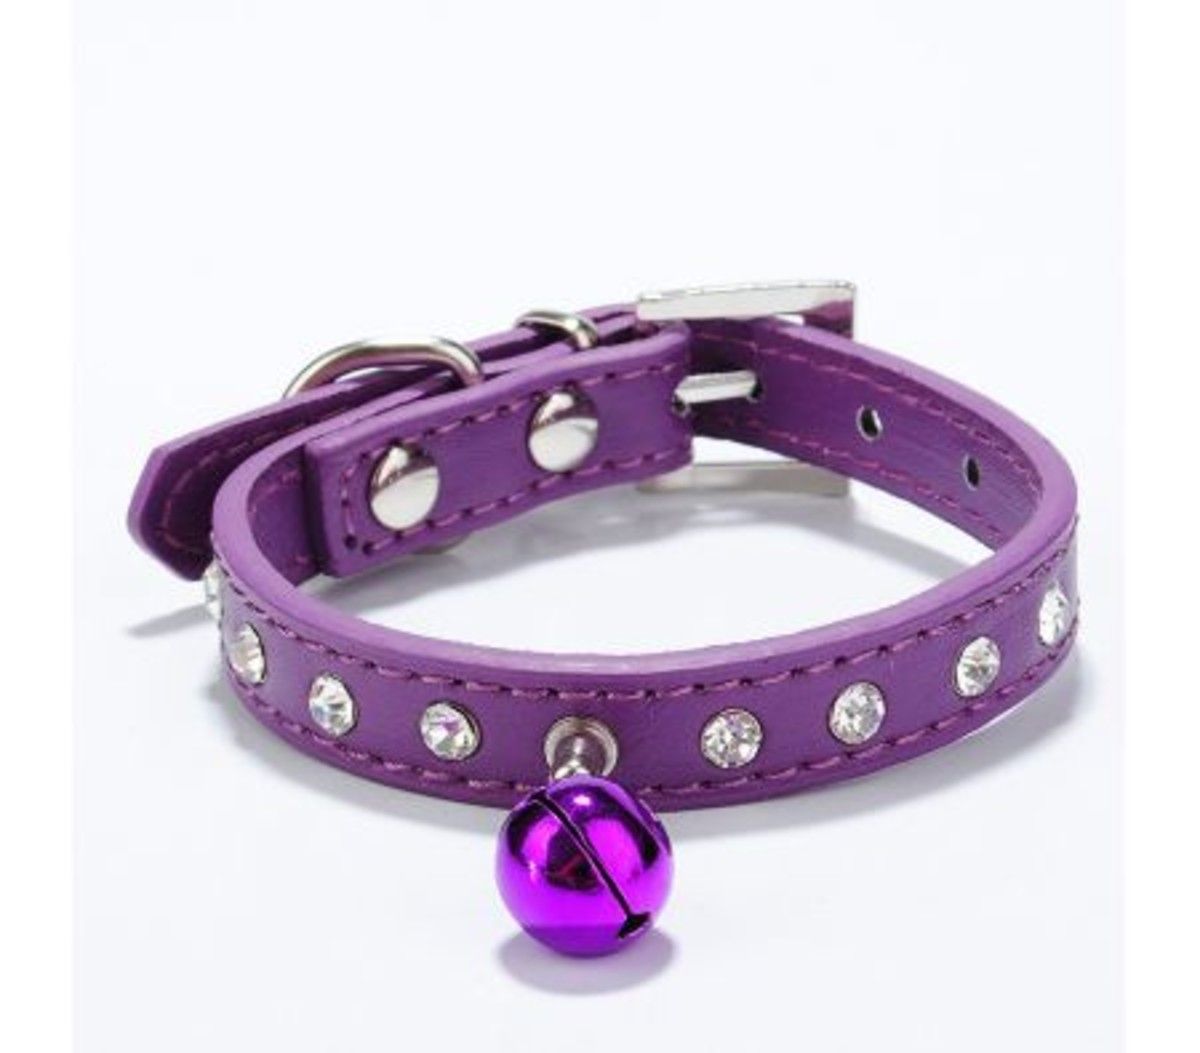 Bell Collars Puppy Dog Cat Safety Accessories Pet Supplies-purple